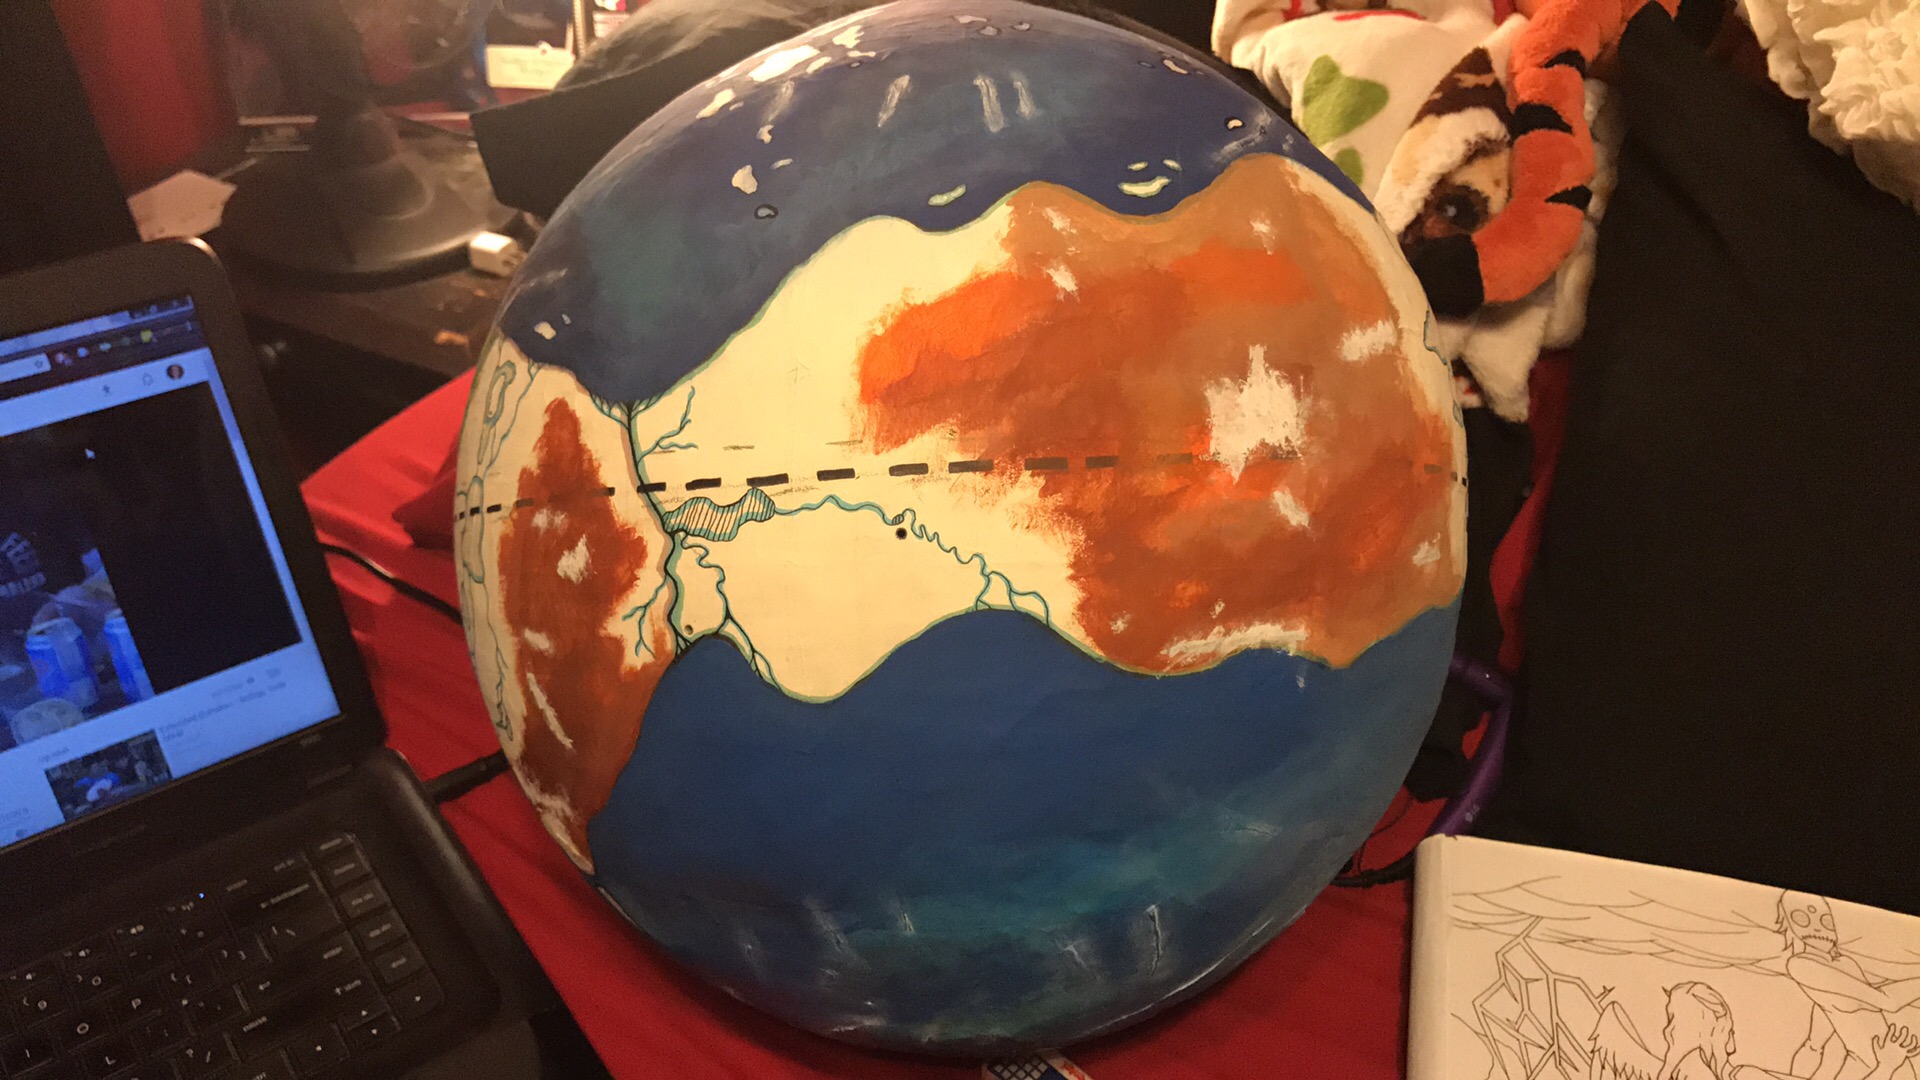 Globe Views